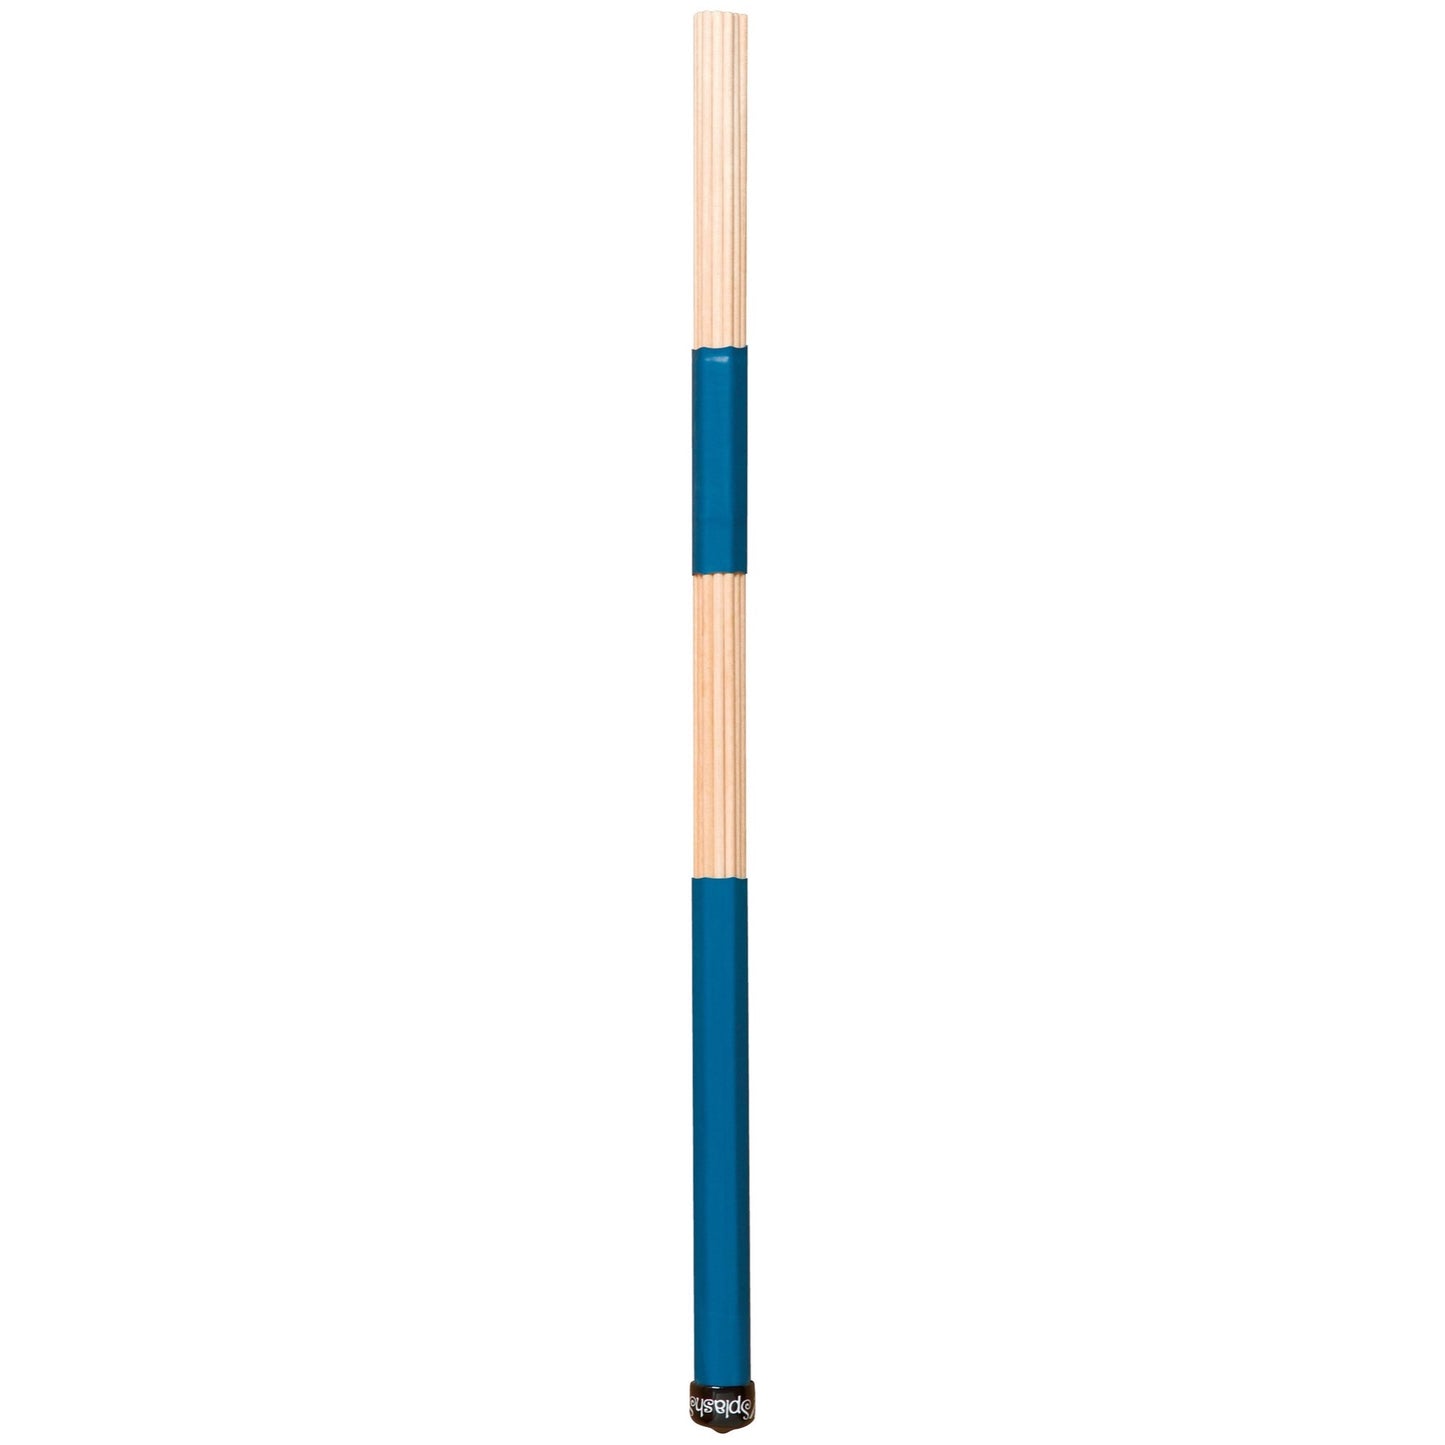 Vater Splashstick Multi-Rod Drumsticks, Pair